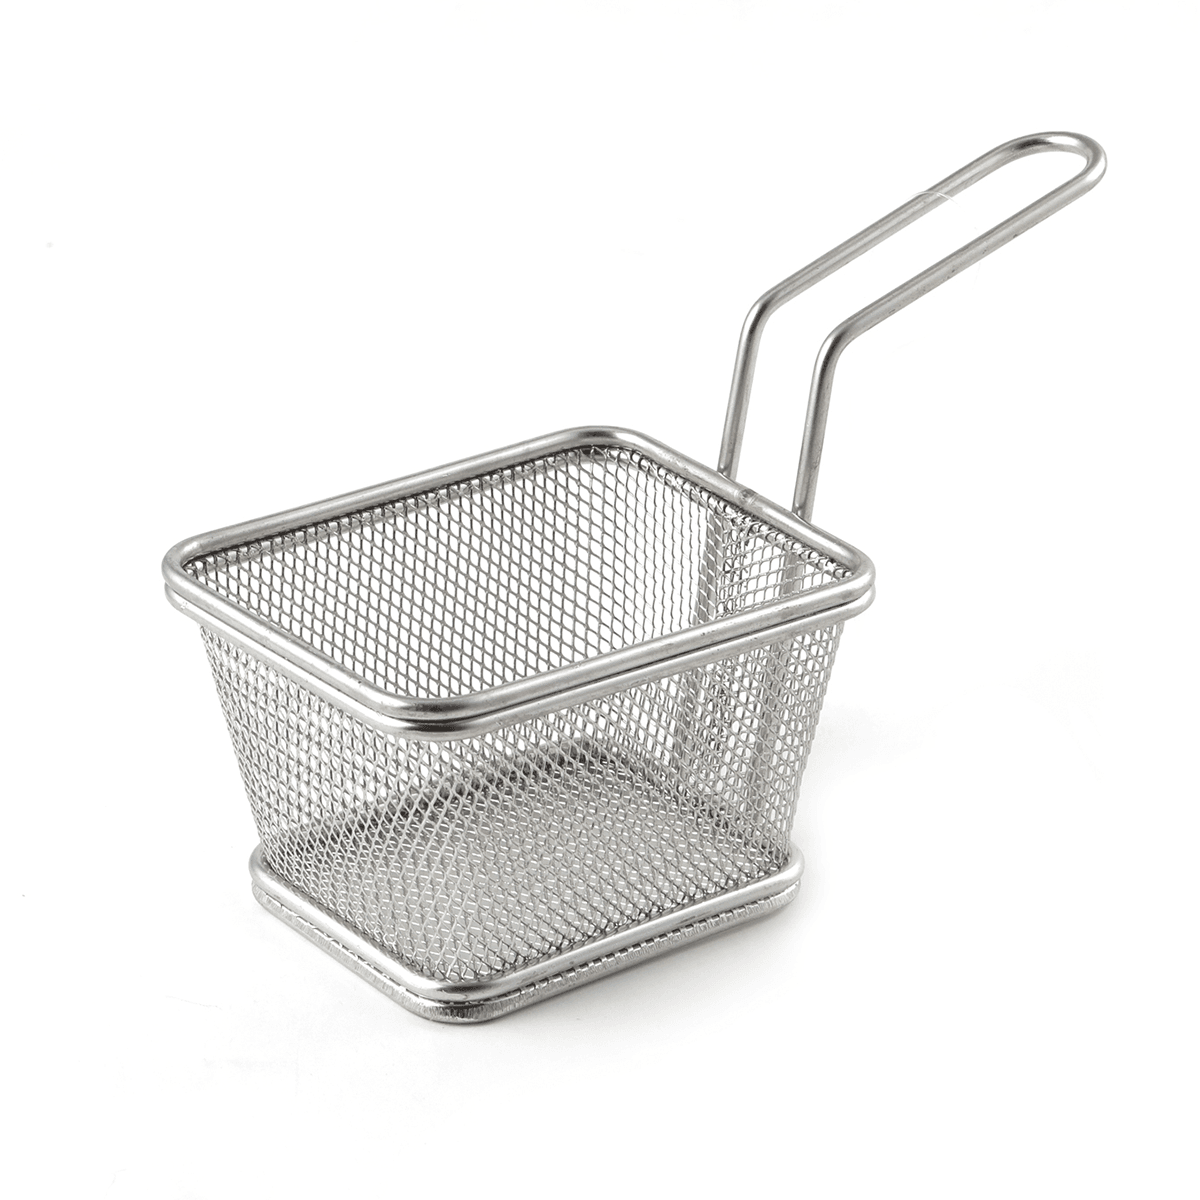 مصفاة ستانلس للقلي 12.5 سم مربعة فضي Stainless Steel Rectangular Fry Basket 12.5 cm